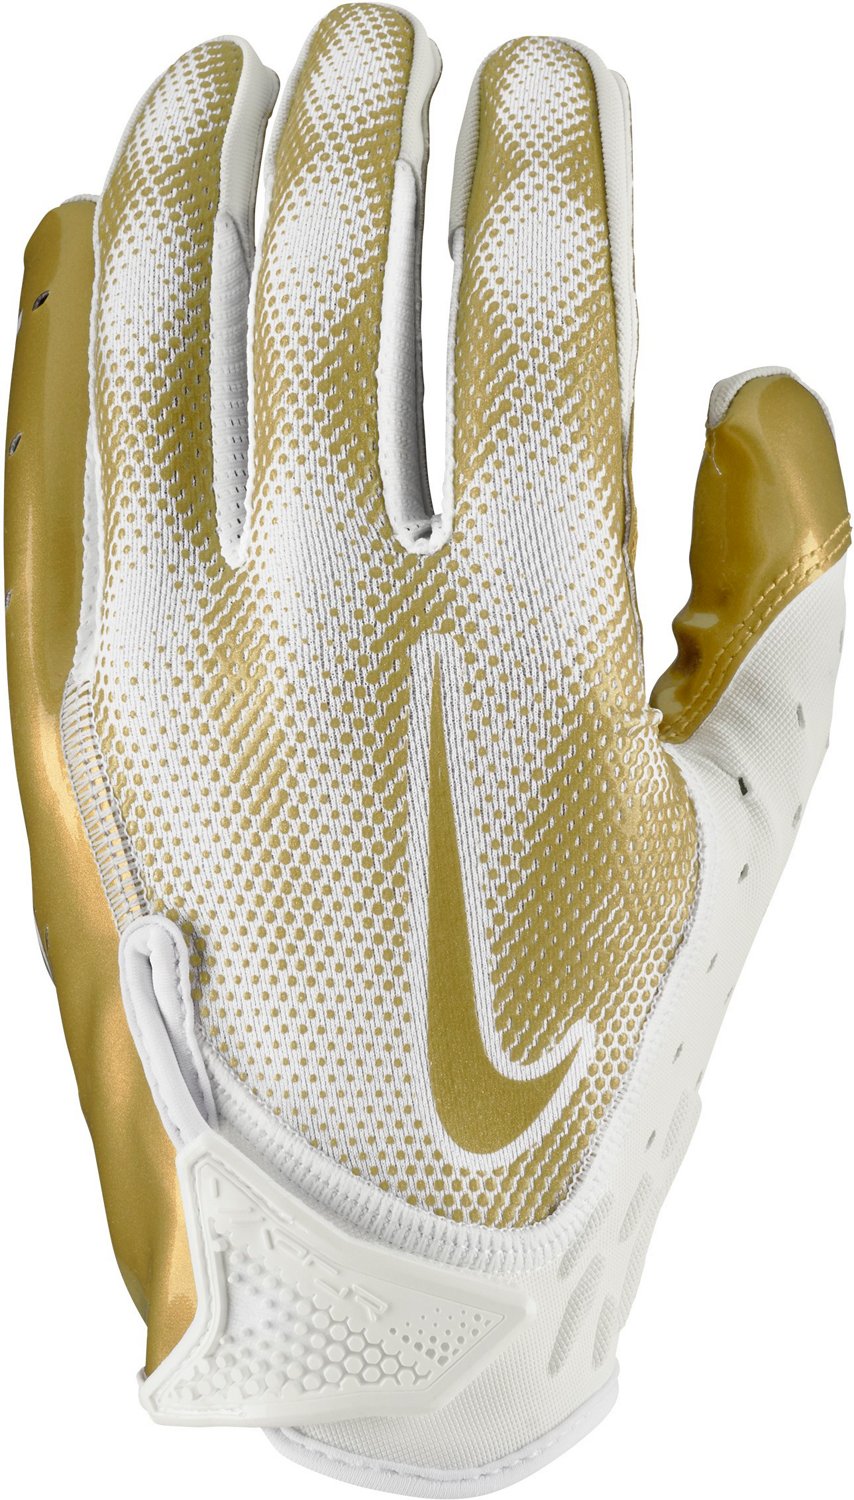 Nike Adults' Vapor Jet 7.0 Metallic Football Gloves